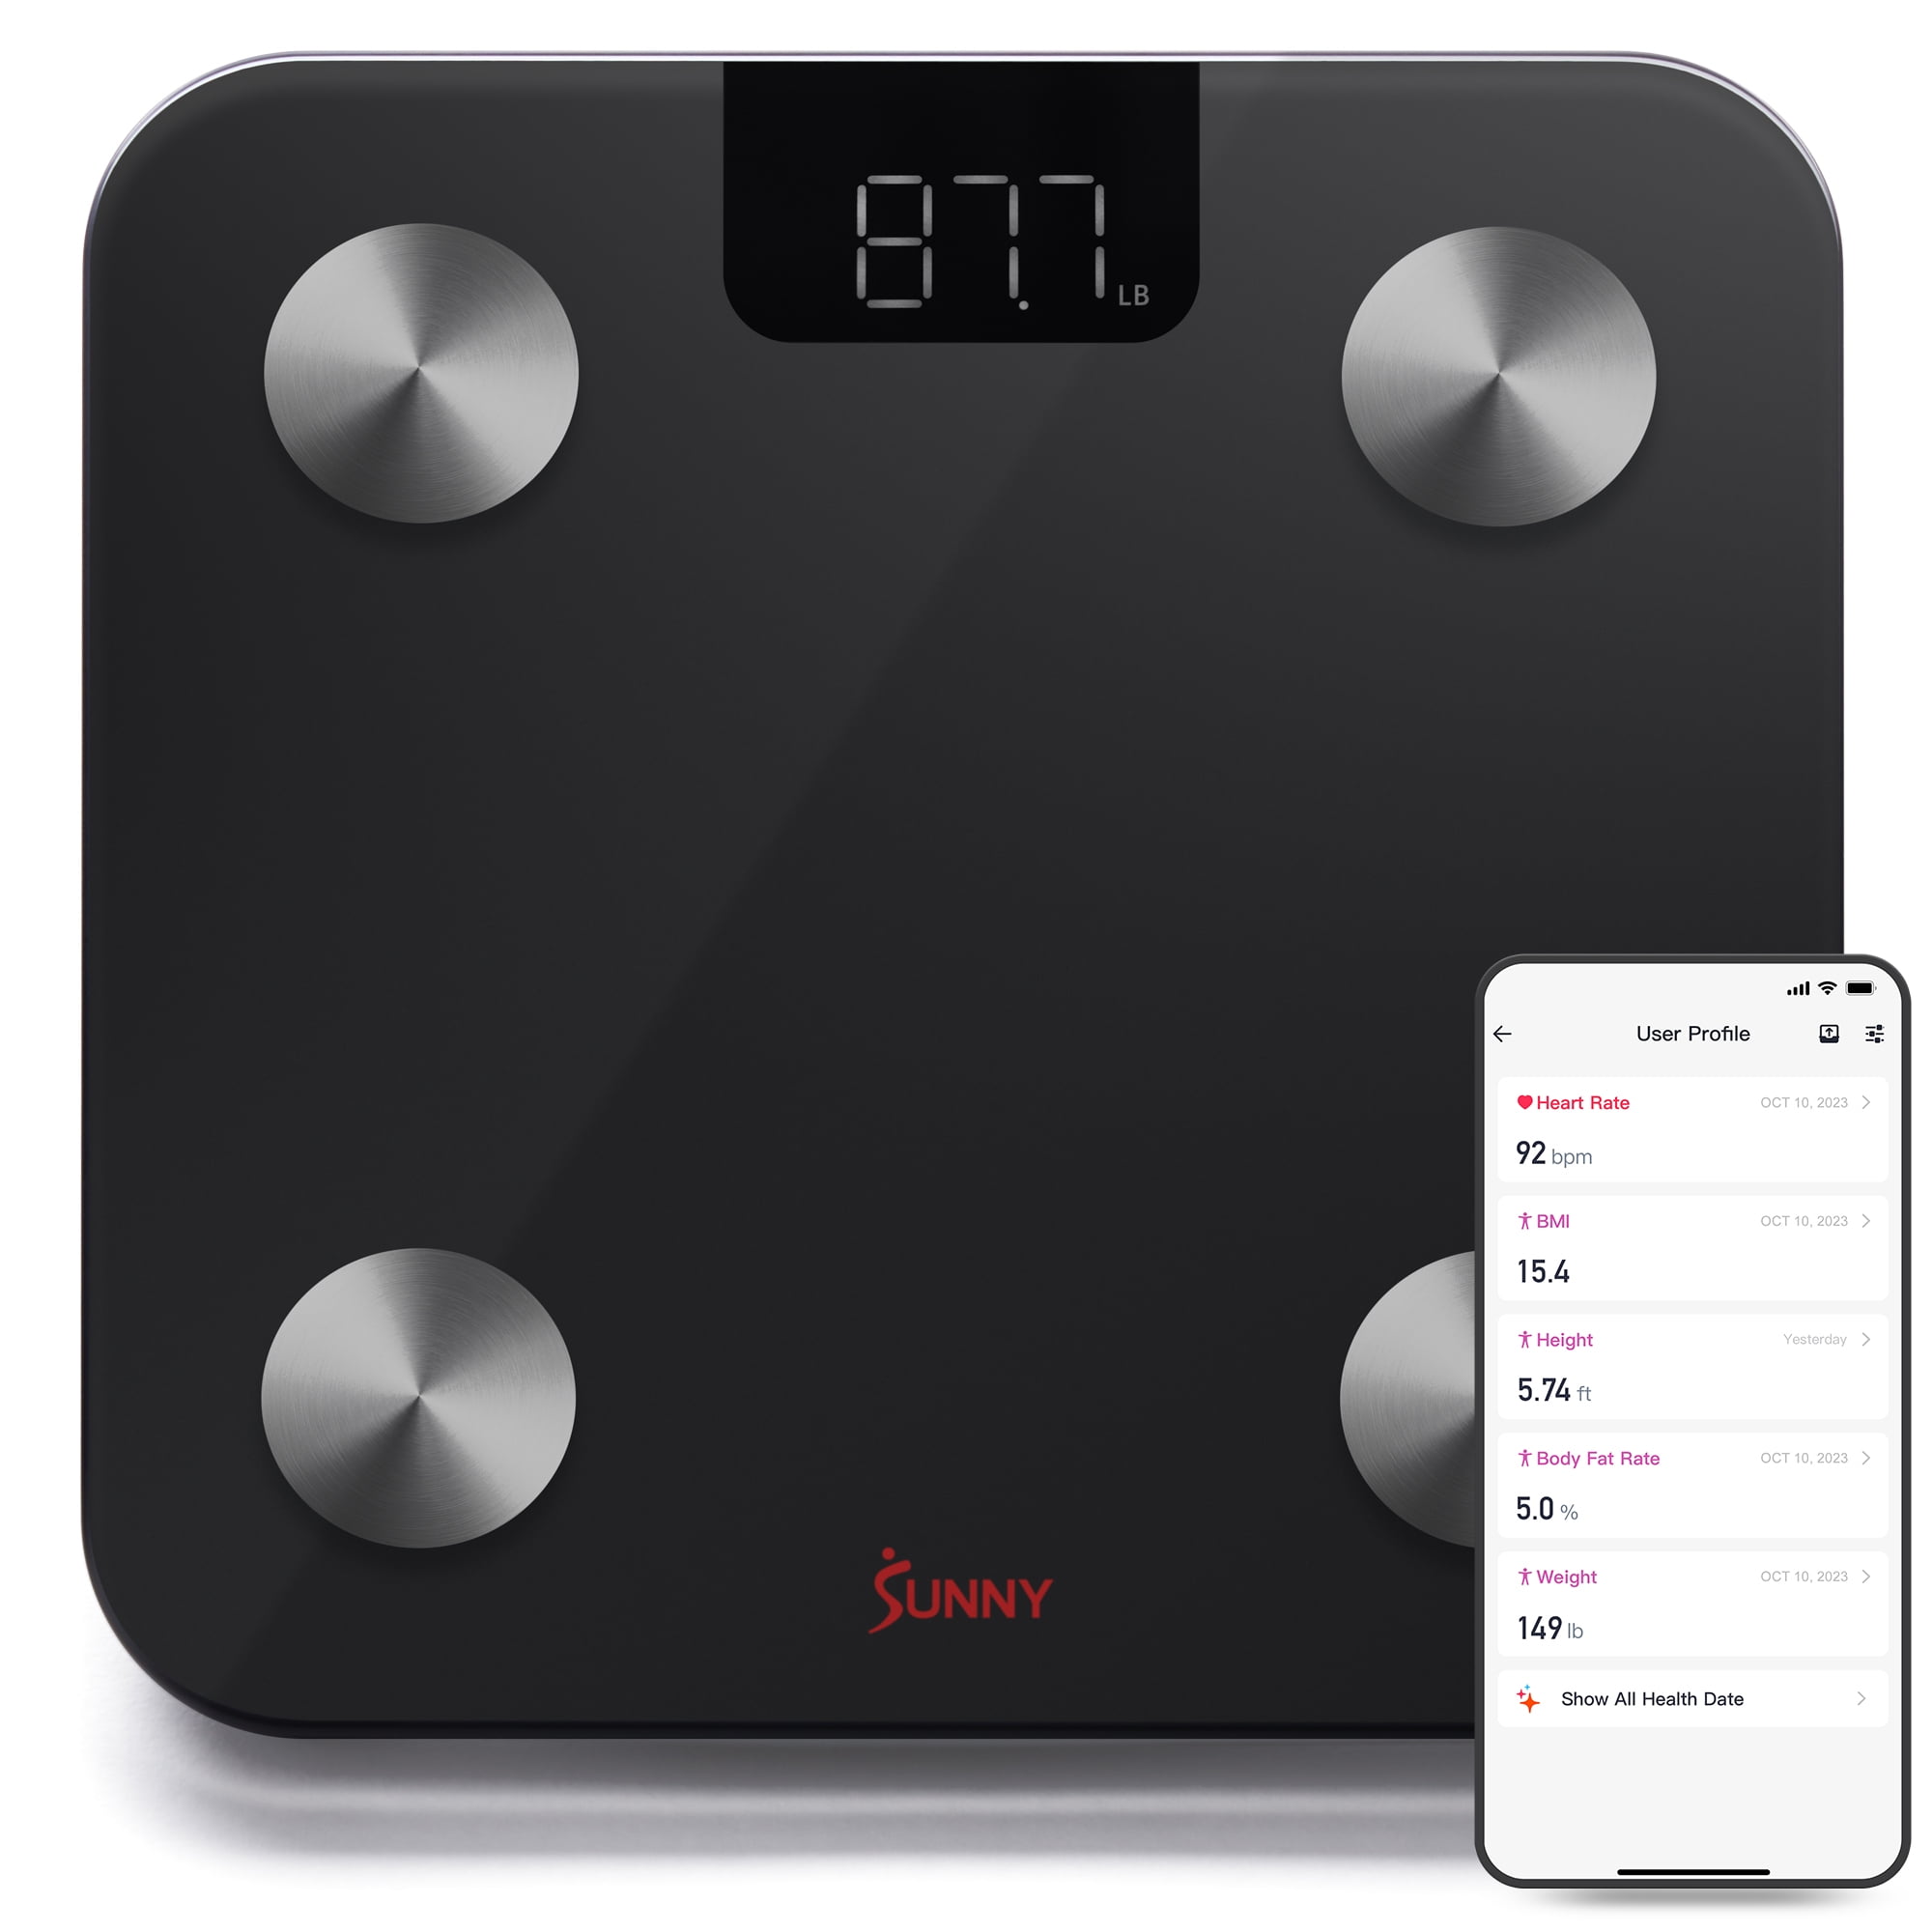 Surpahs Shiny Small Lightweight Digital Bathroom Scale w/ BMI Calculation,  Auto Identify 4 Users [Sachet Pink]